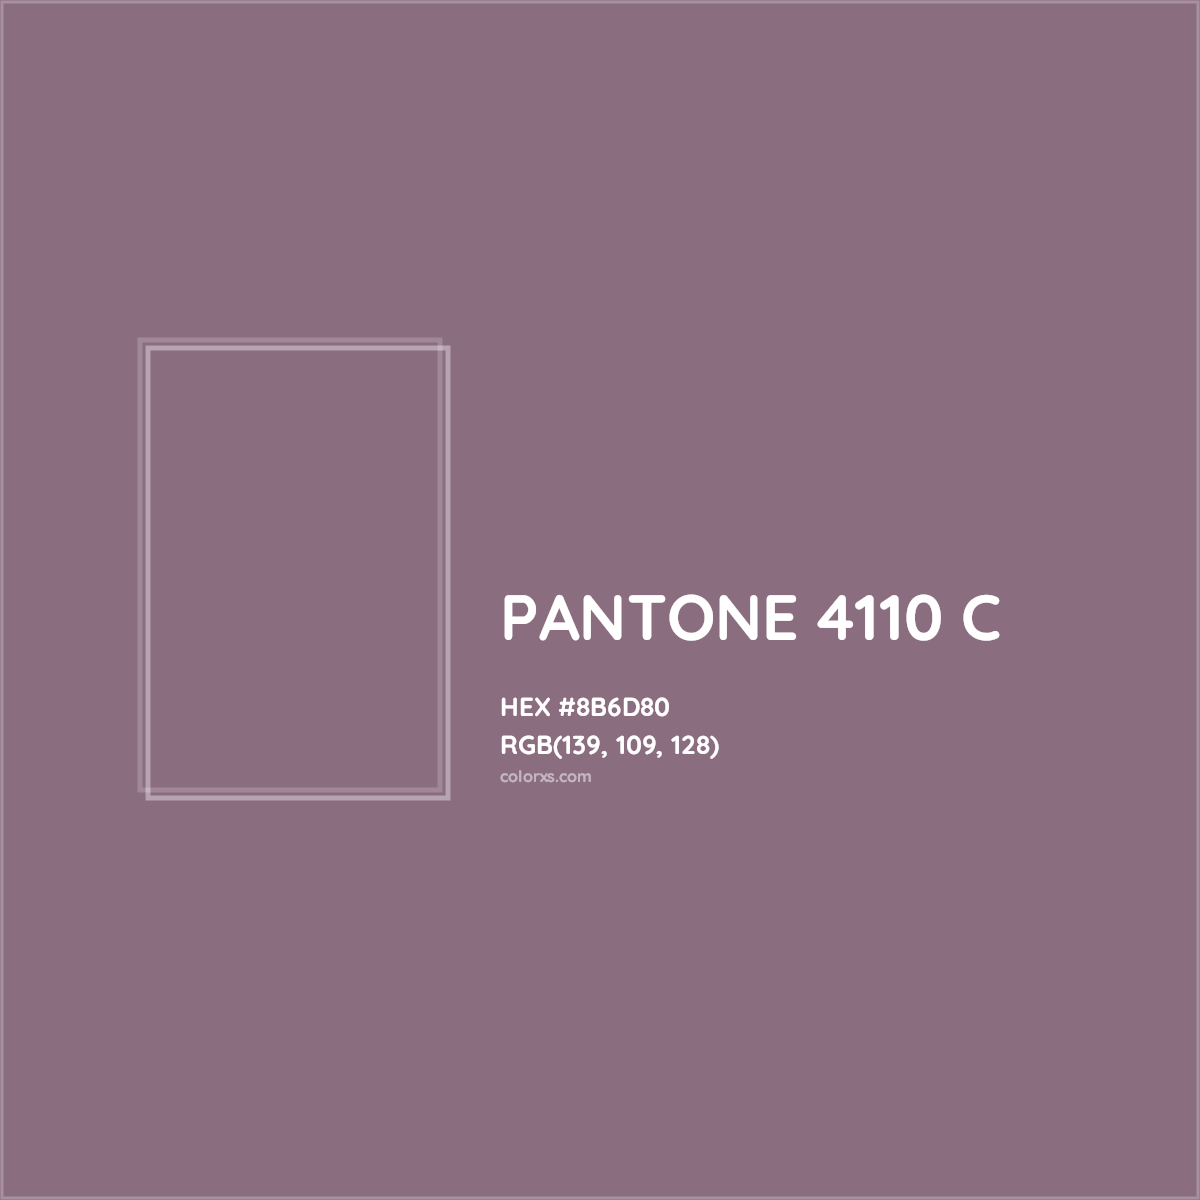 HEX #8B6D80 PANTONE 4110 C CMS Pantone PMS - Color Code